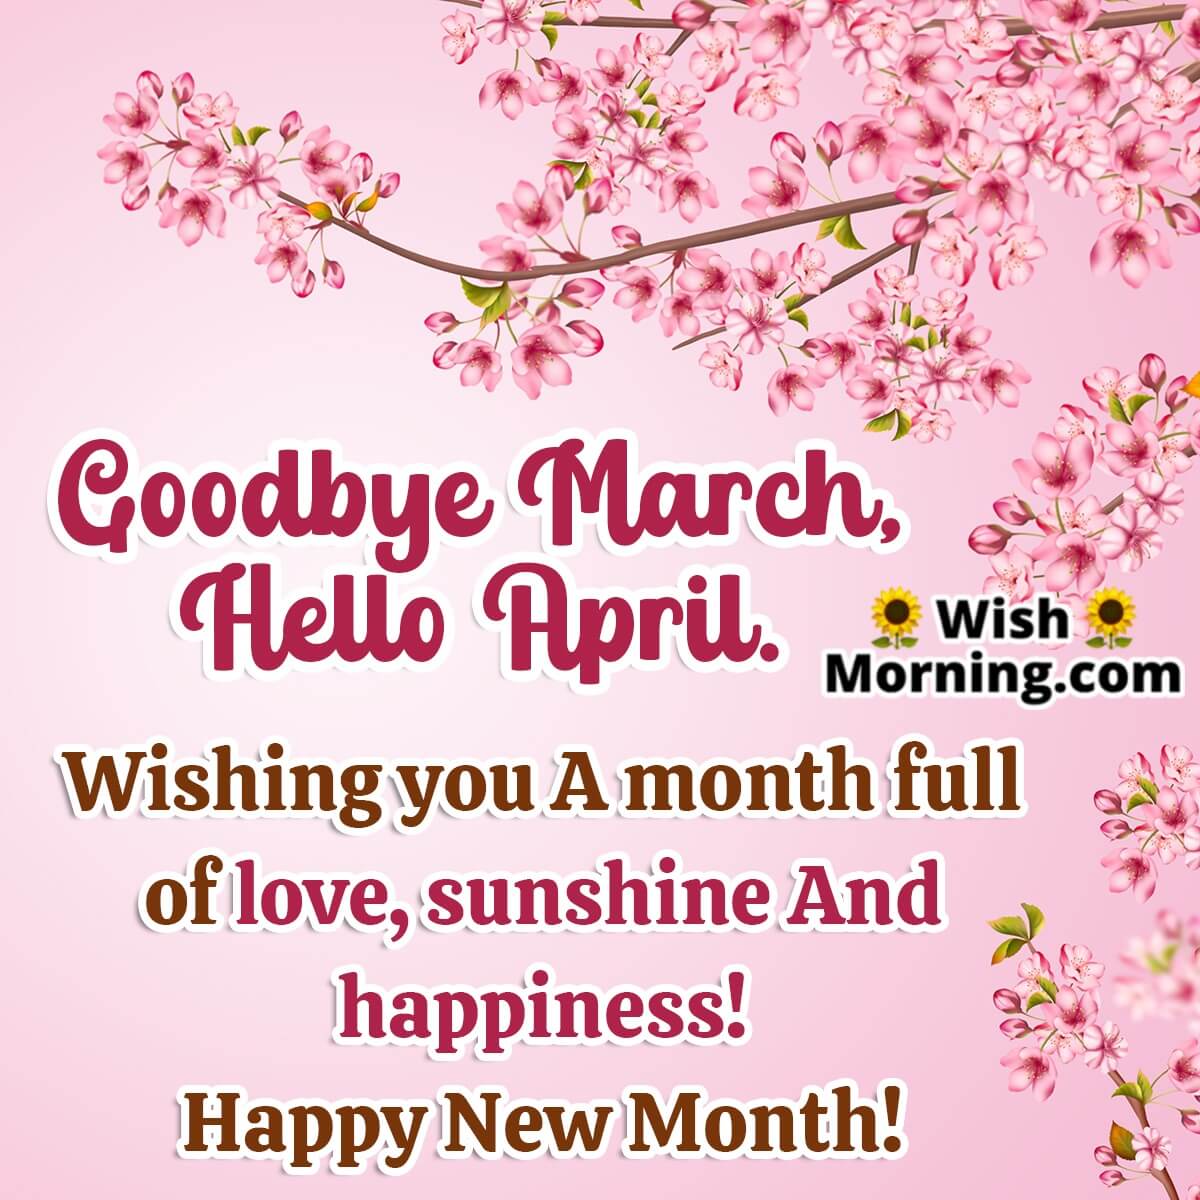 Goodbye March! Hello April!